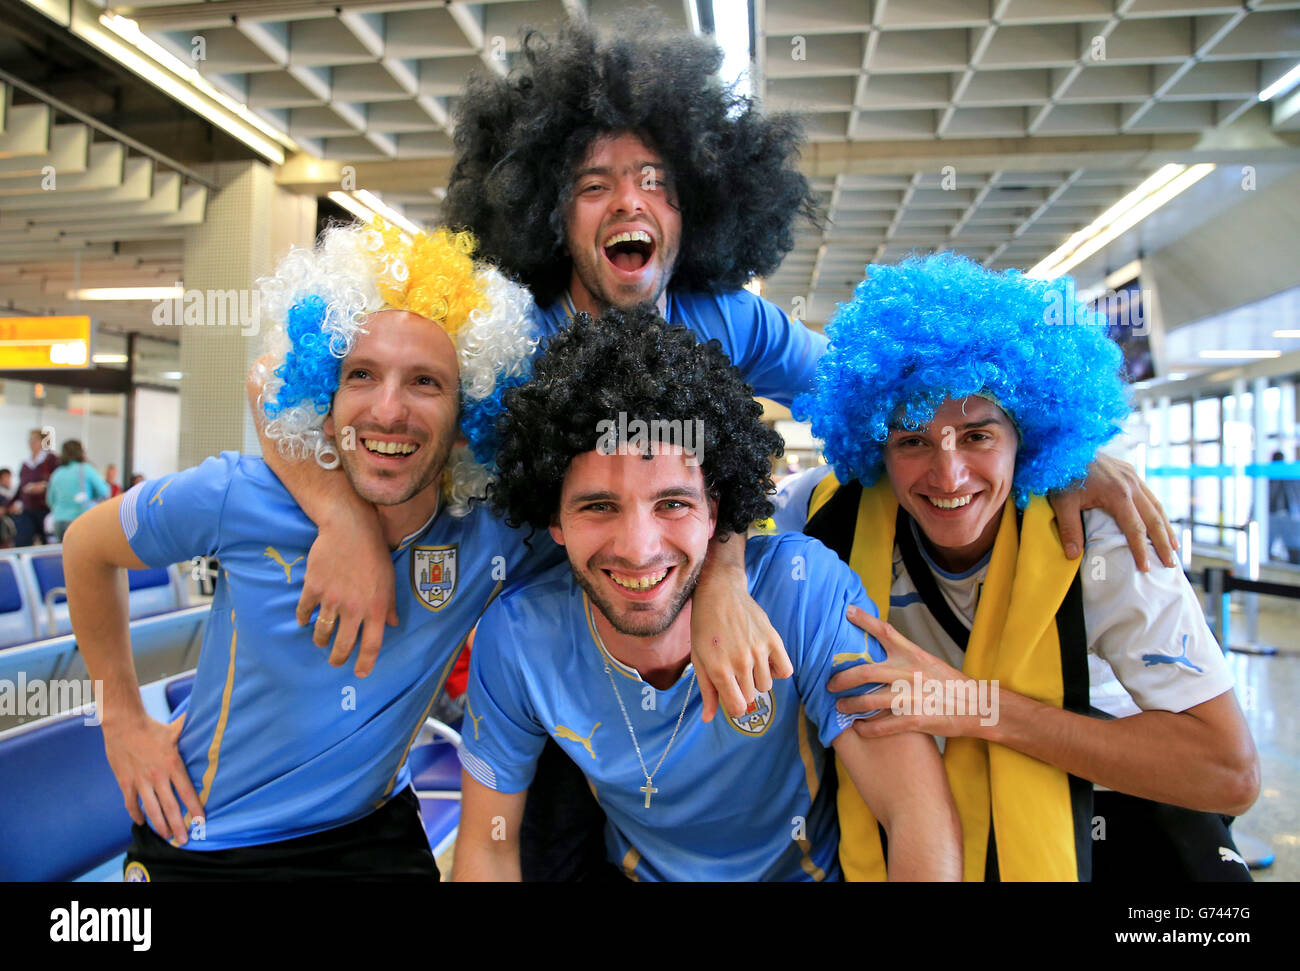 Uruguay and Brazil secure World Cup berth – Beach Soccer Worldwide